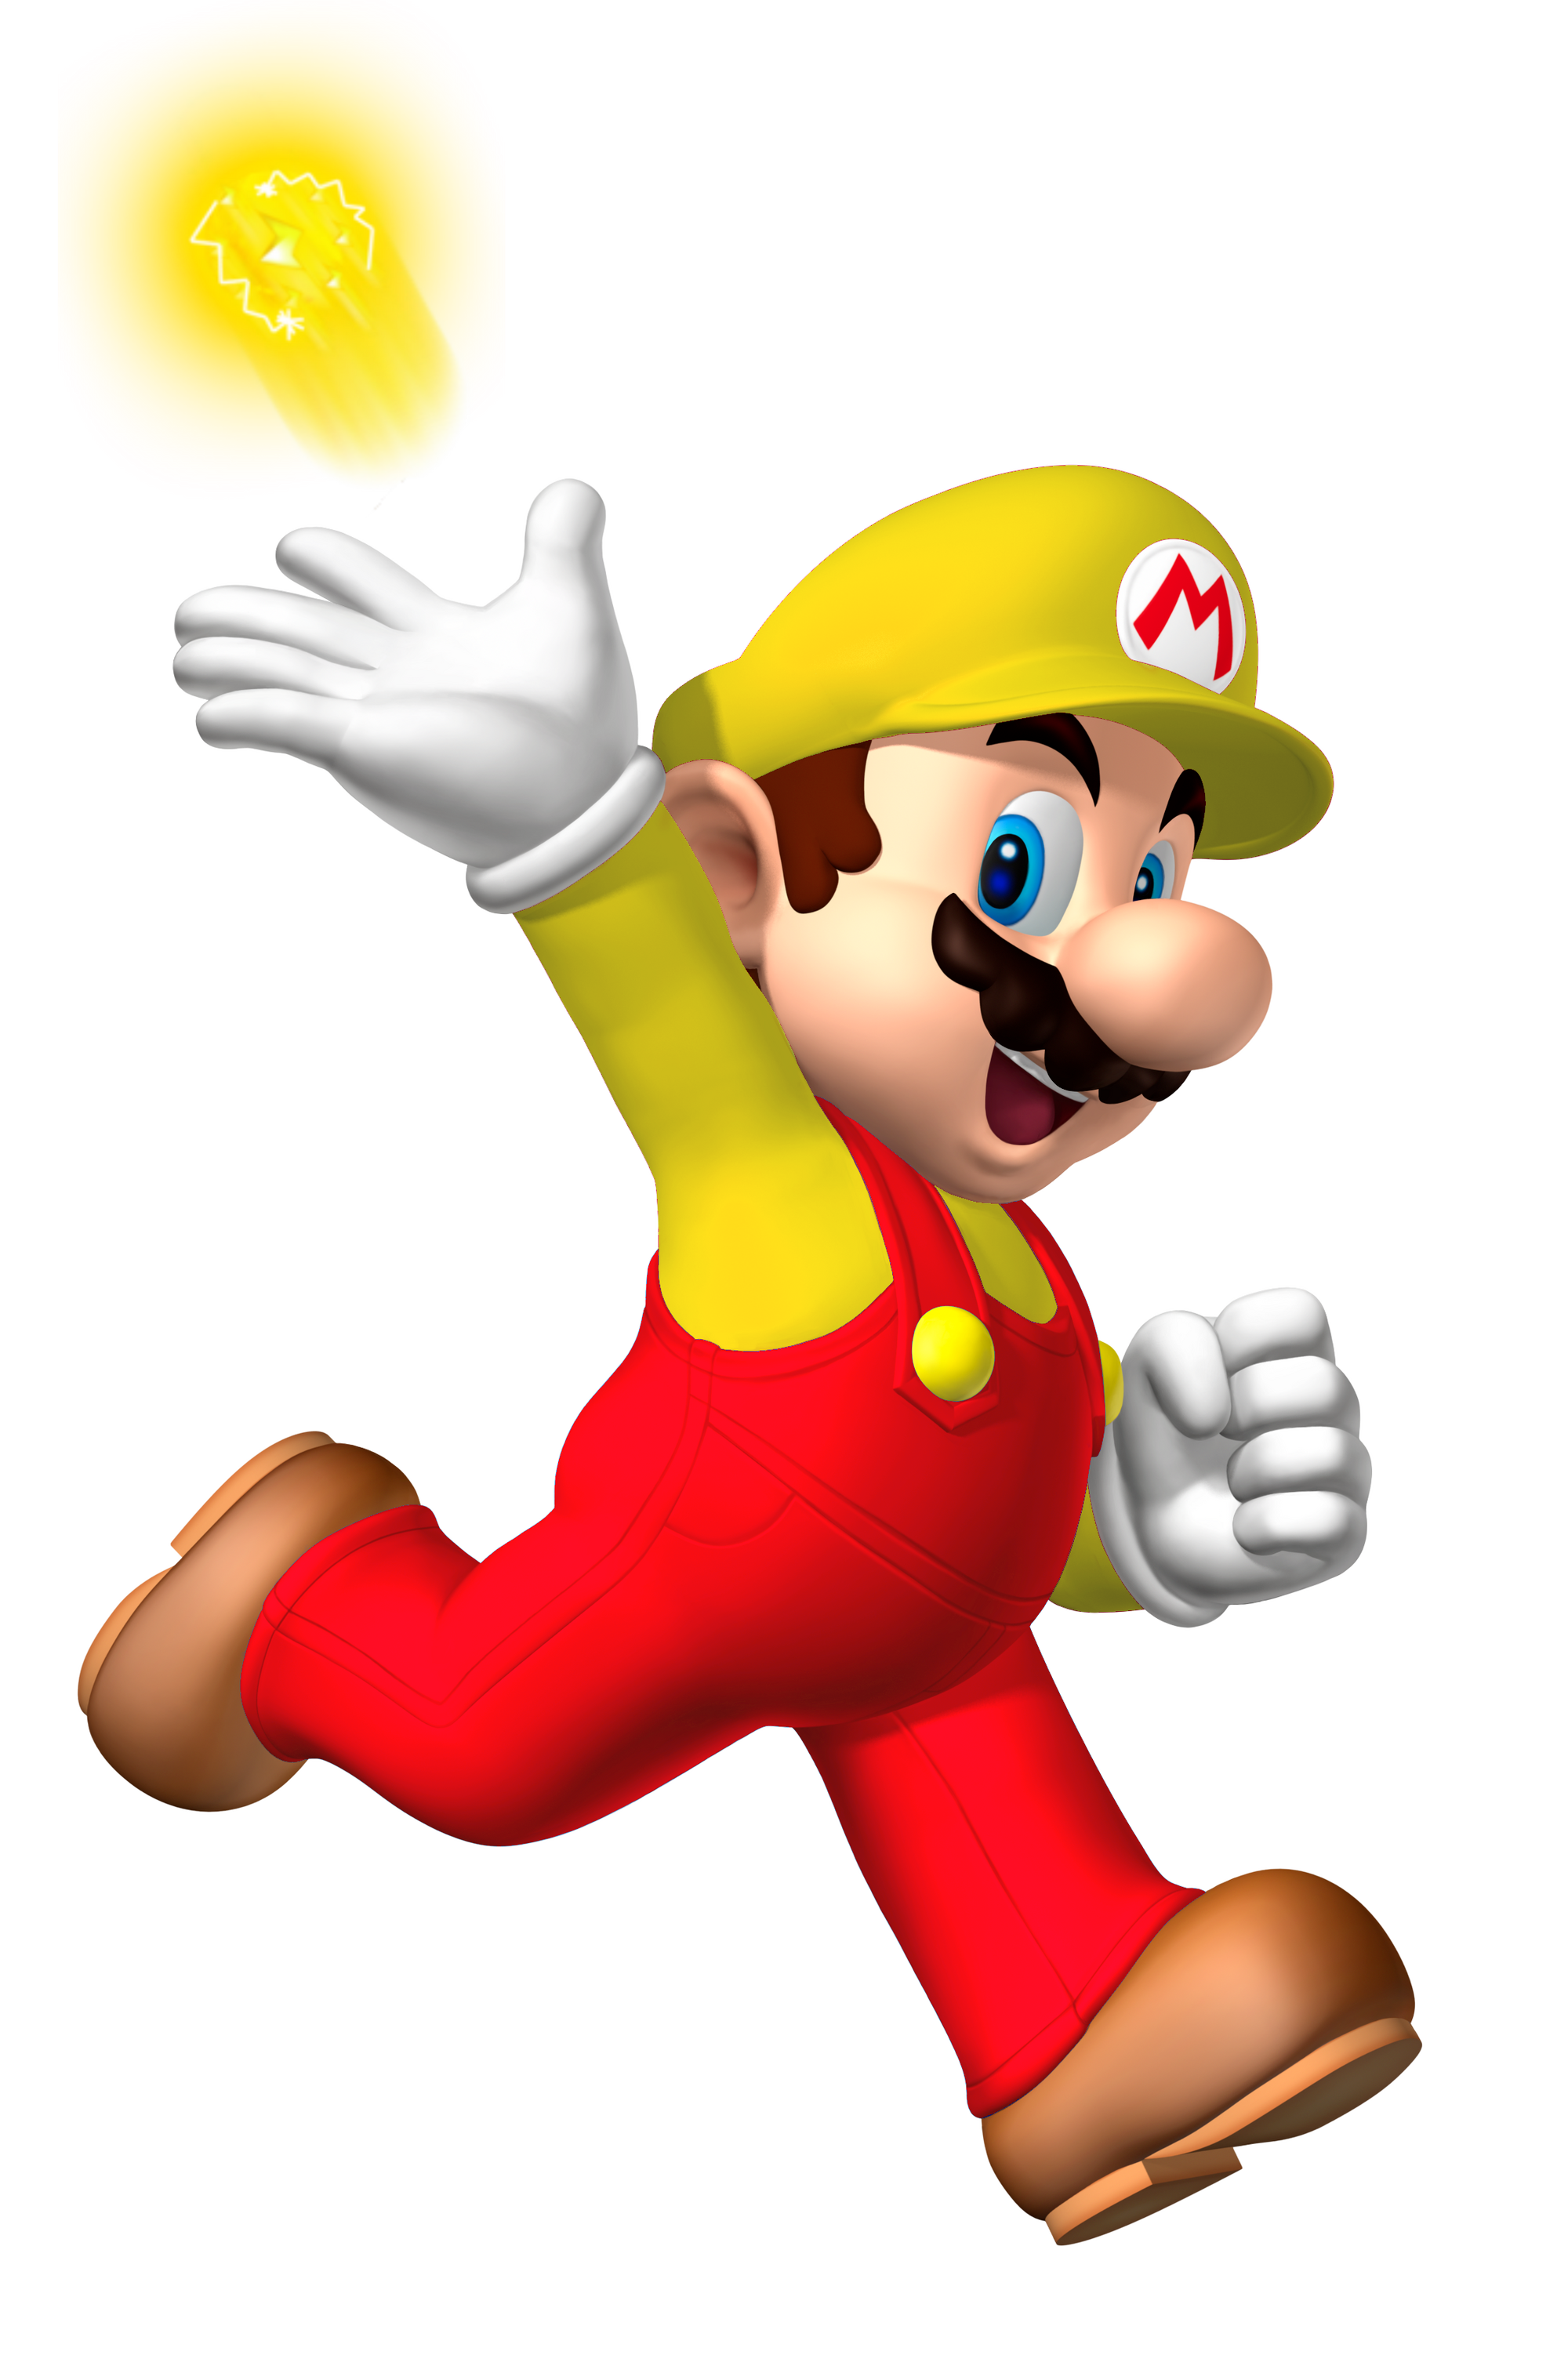 Image Electric Mariopng Fantendo Nintendo Fanon Wiki Fandom Powered By Wikia 6781